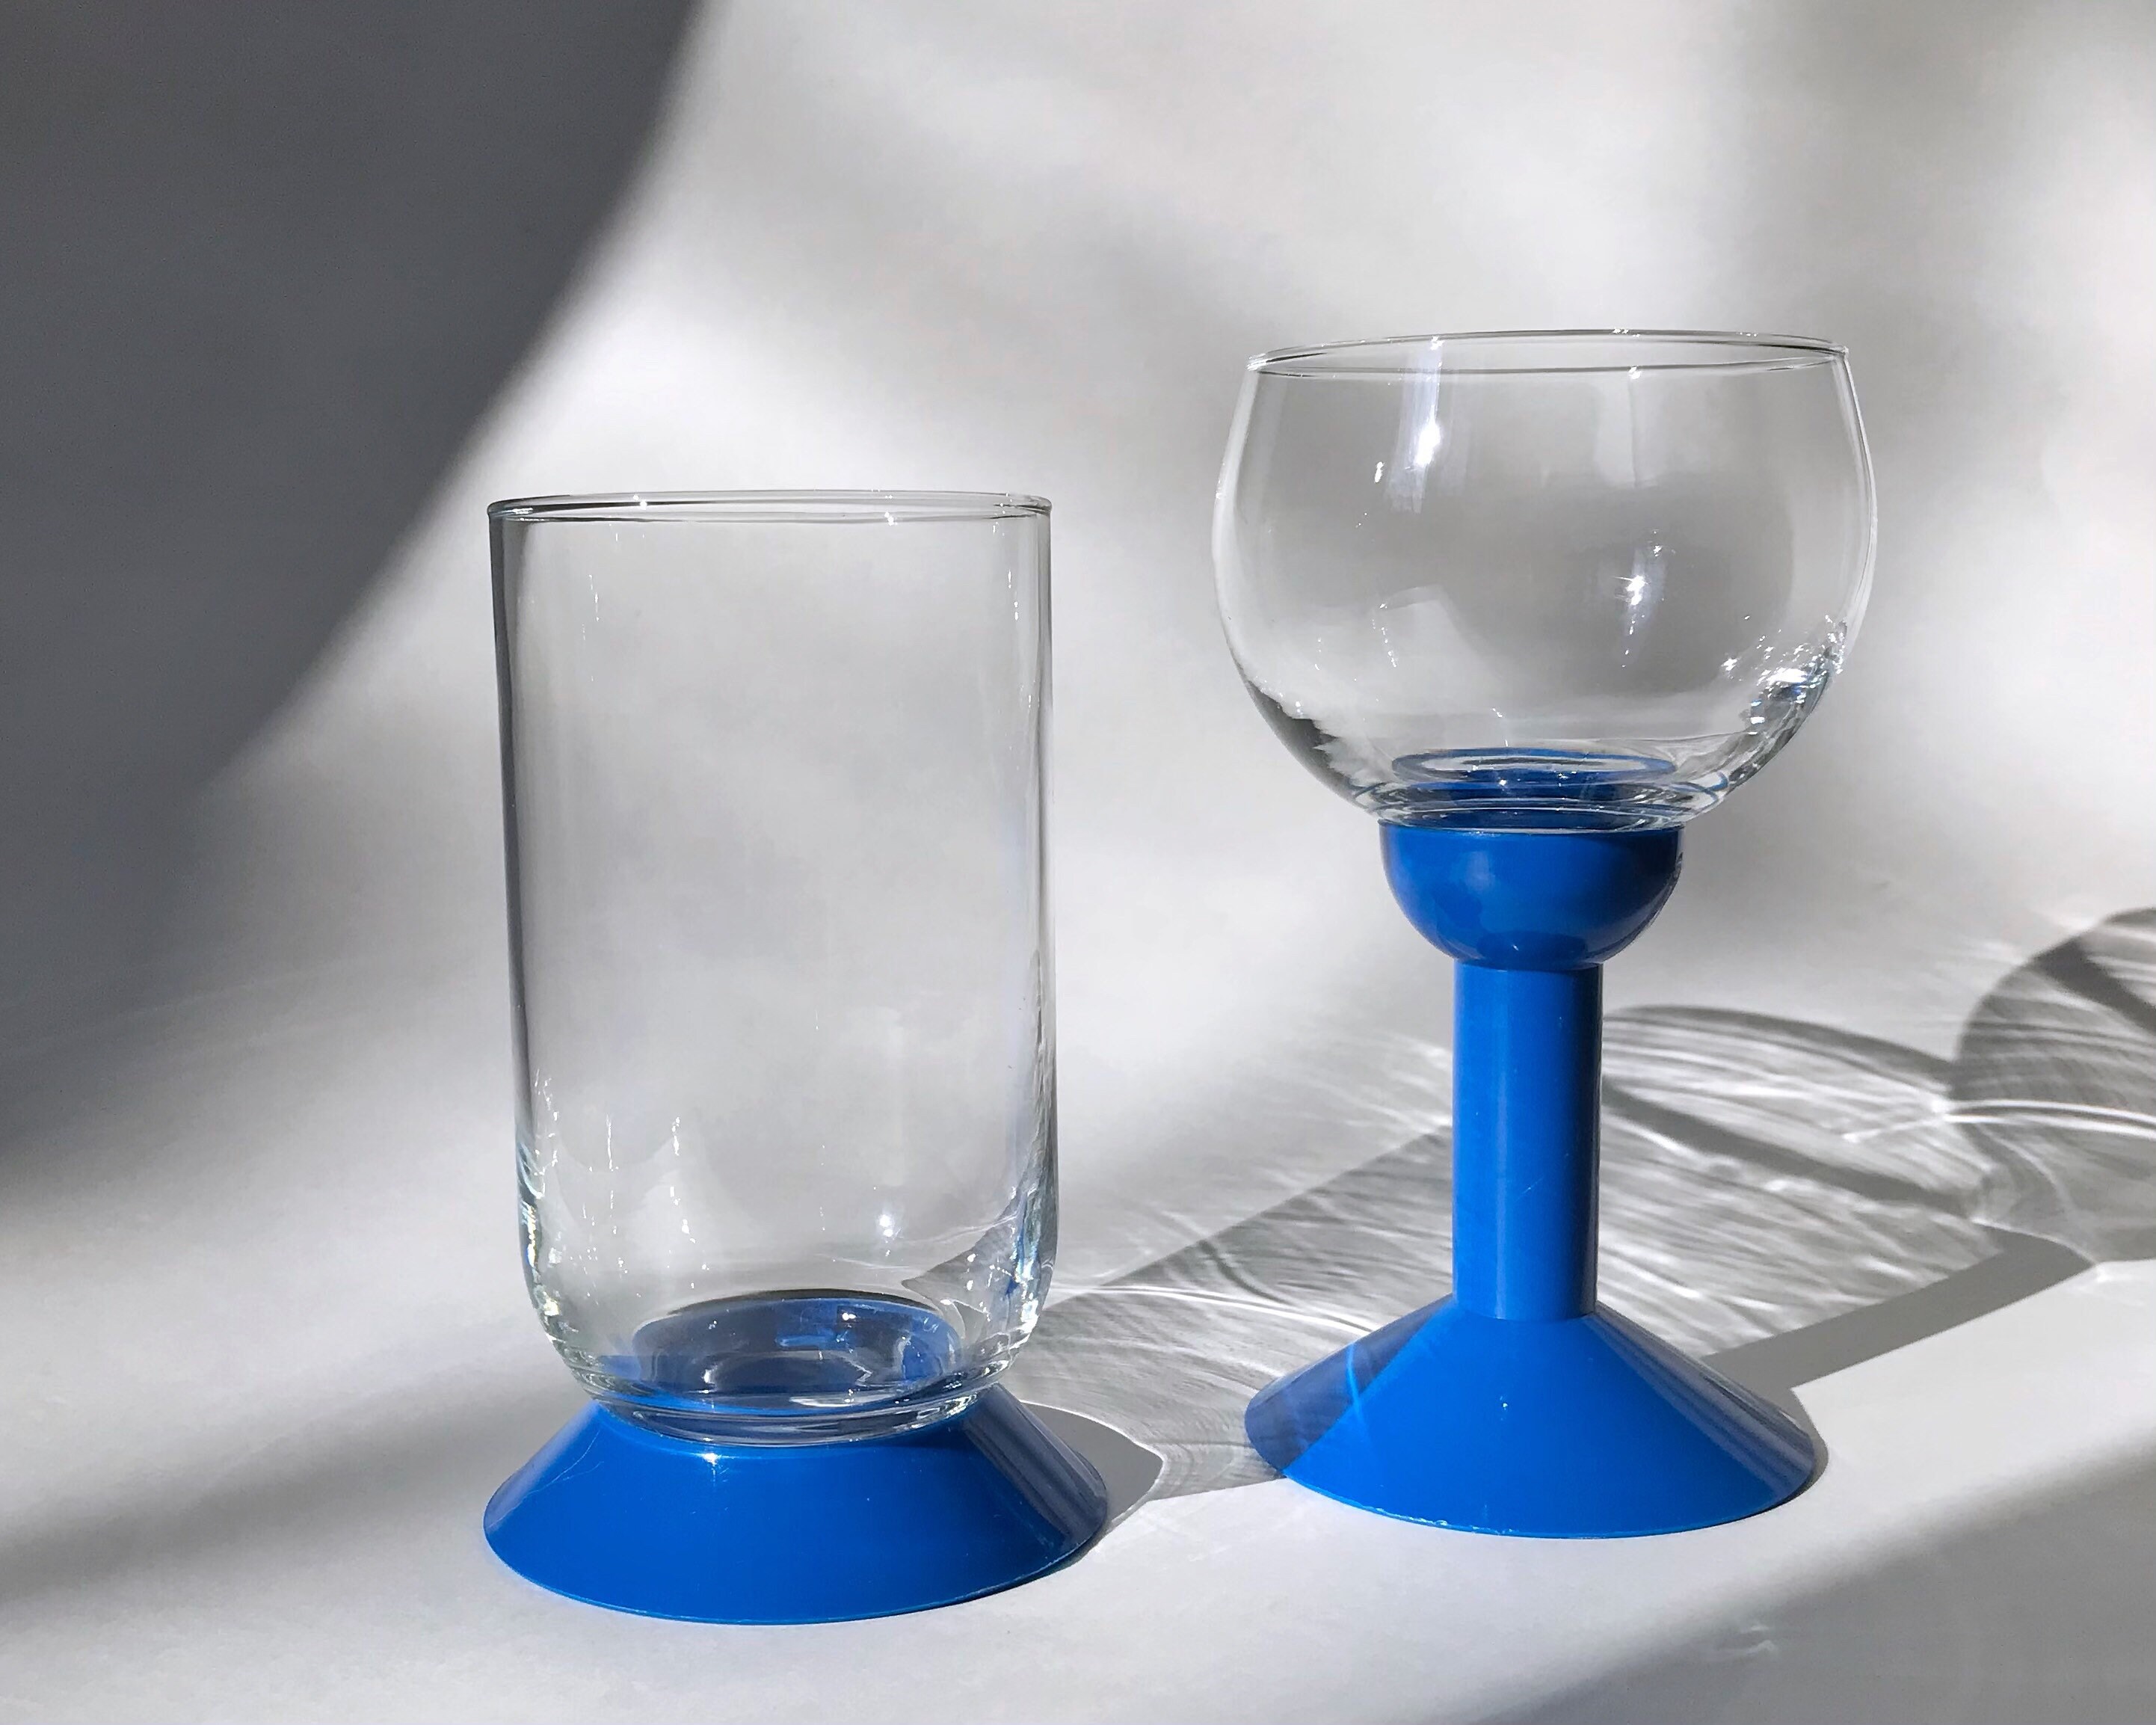 12oz Bodum Glass Set - Custom Branded Promotional Glasses 